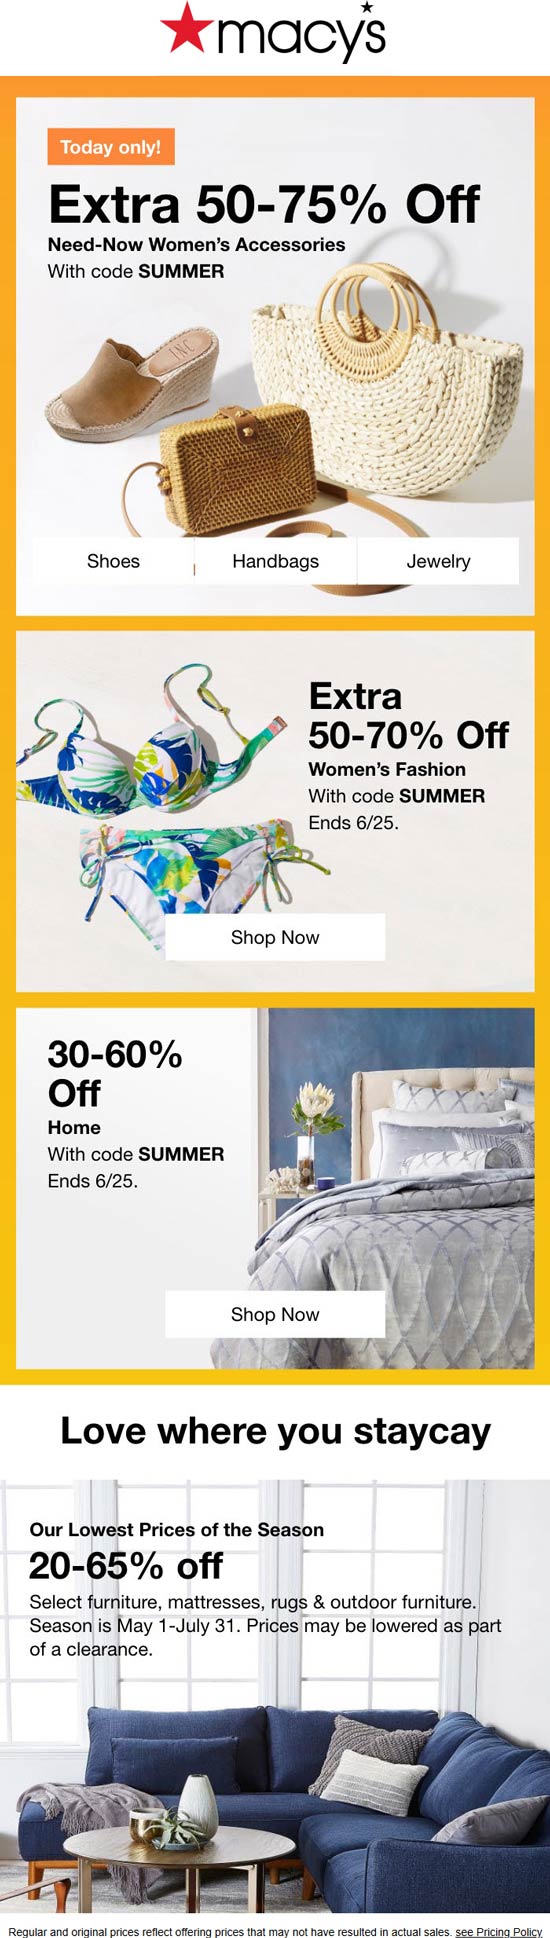 Macys stores Coupon  50-75% off accessories & more today at Macys via promo code SUMMER #macys